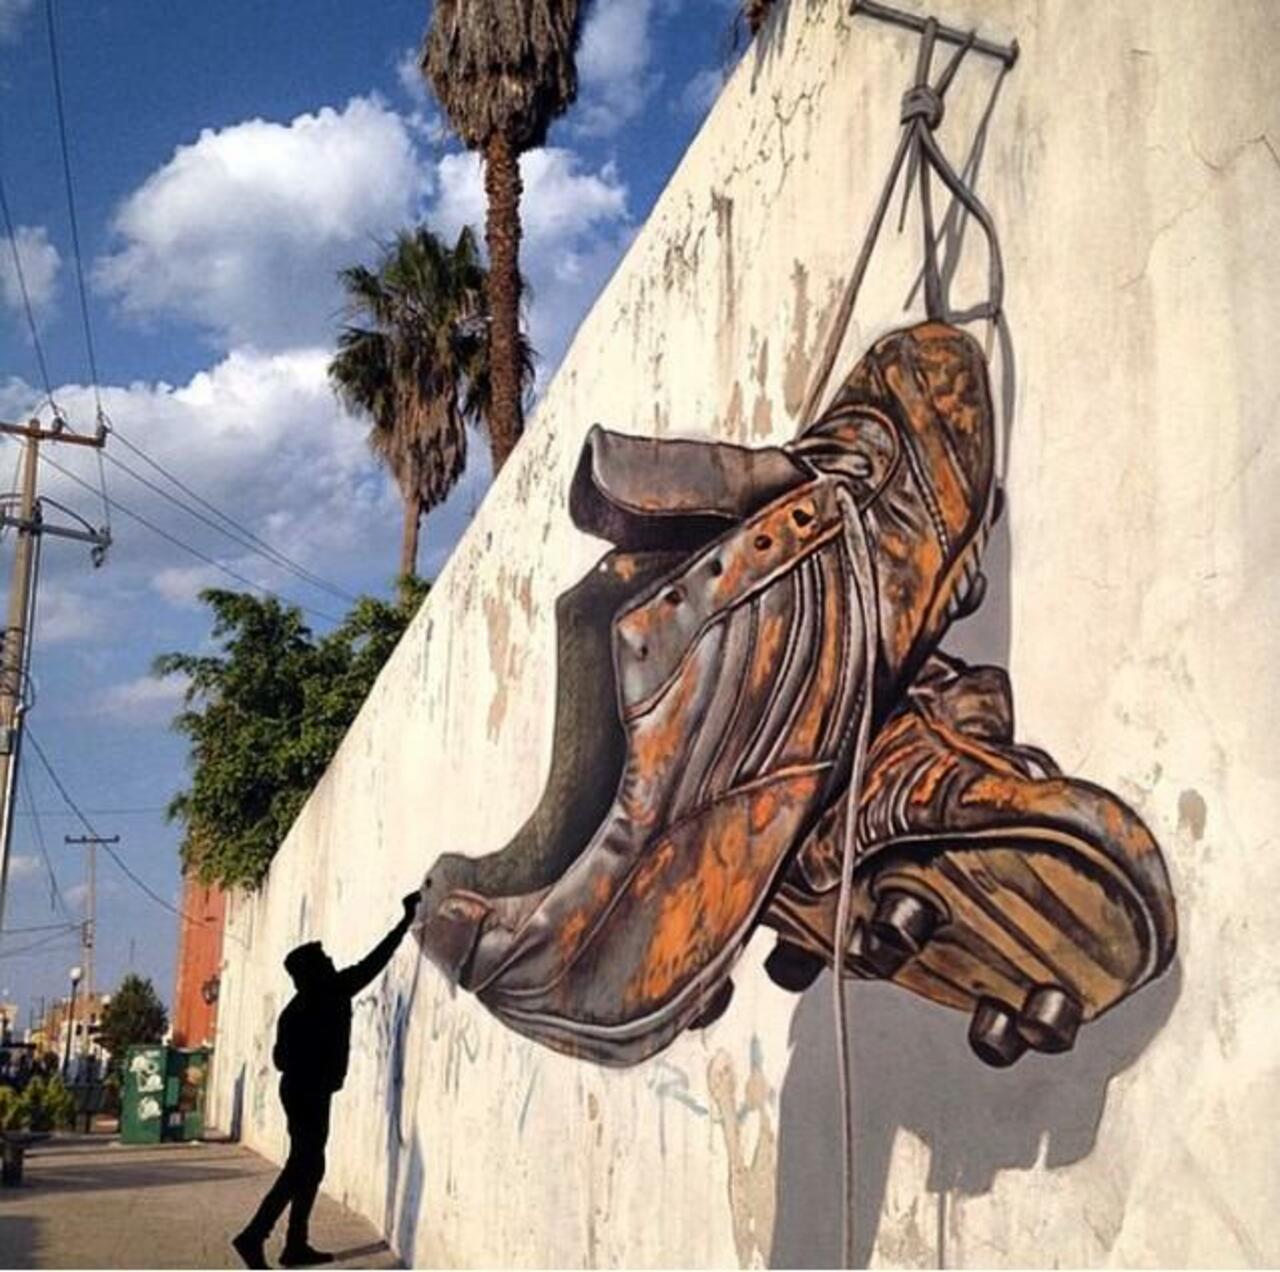 Awesome anamorphic 3D Street Art by Juandres Vera 

#art #graffiti #mural #streetart http://t.co/CpWgUYi6VF